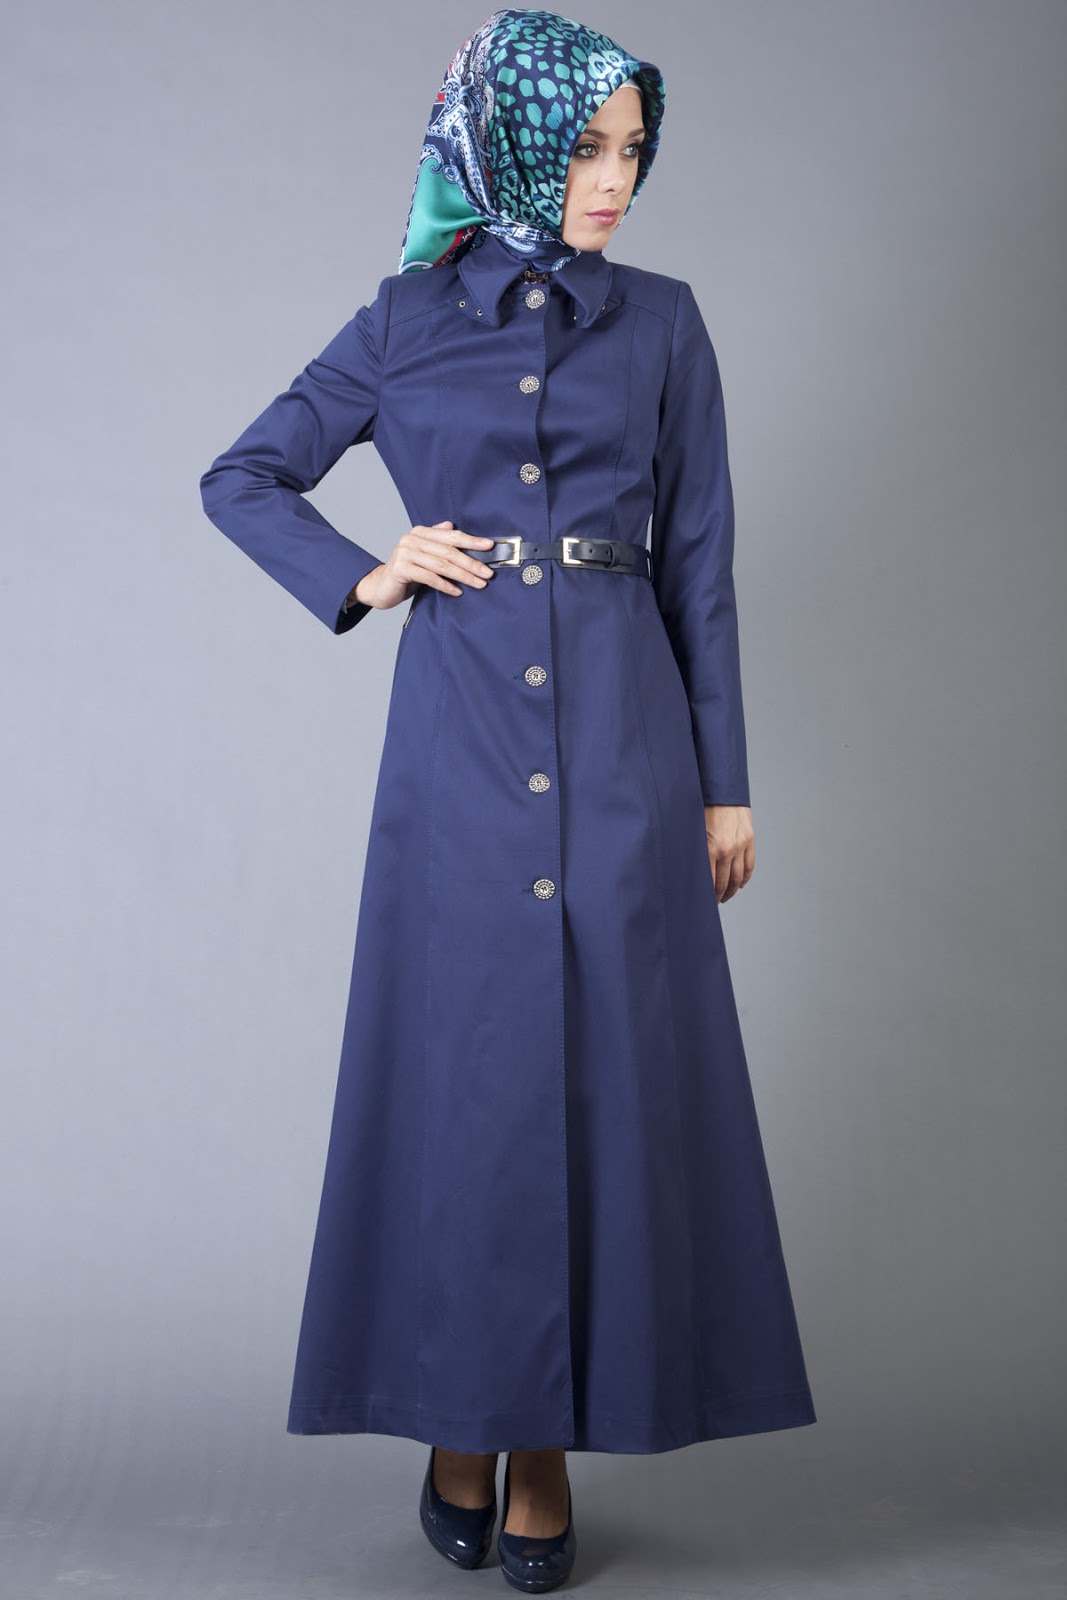 Trendy Hijab Fashion: Armine New Topcoat Models